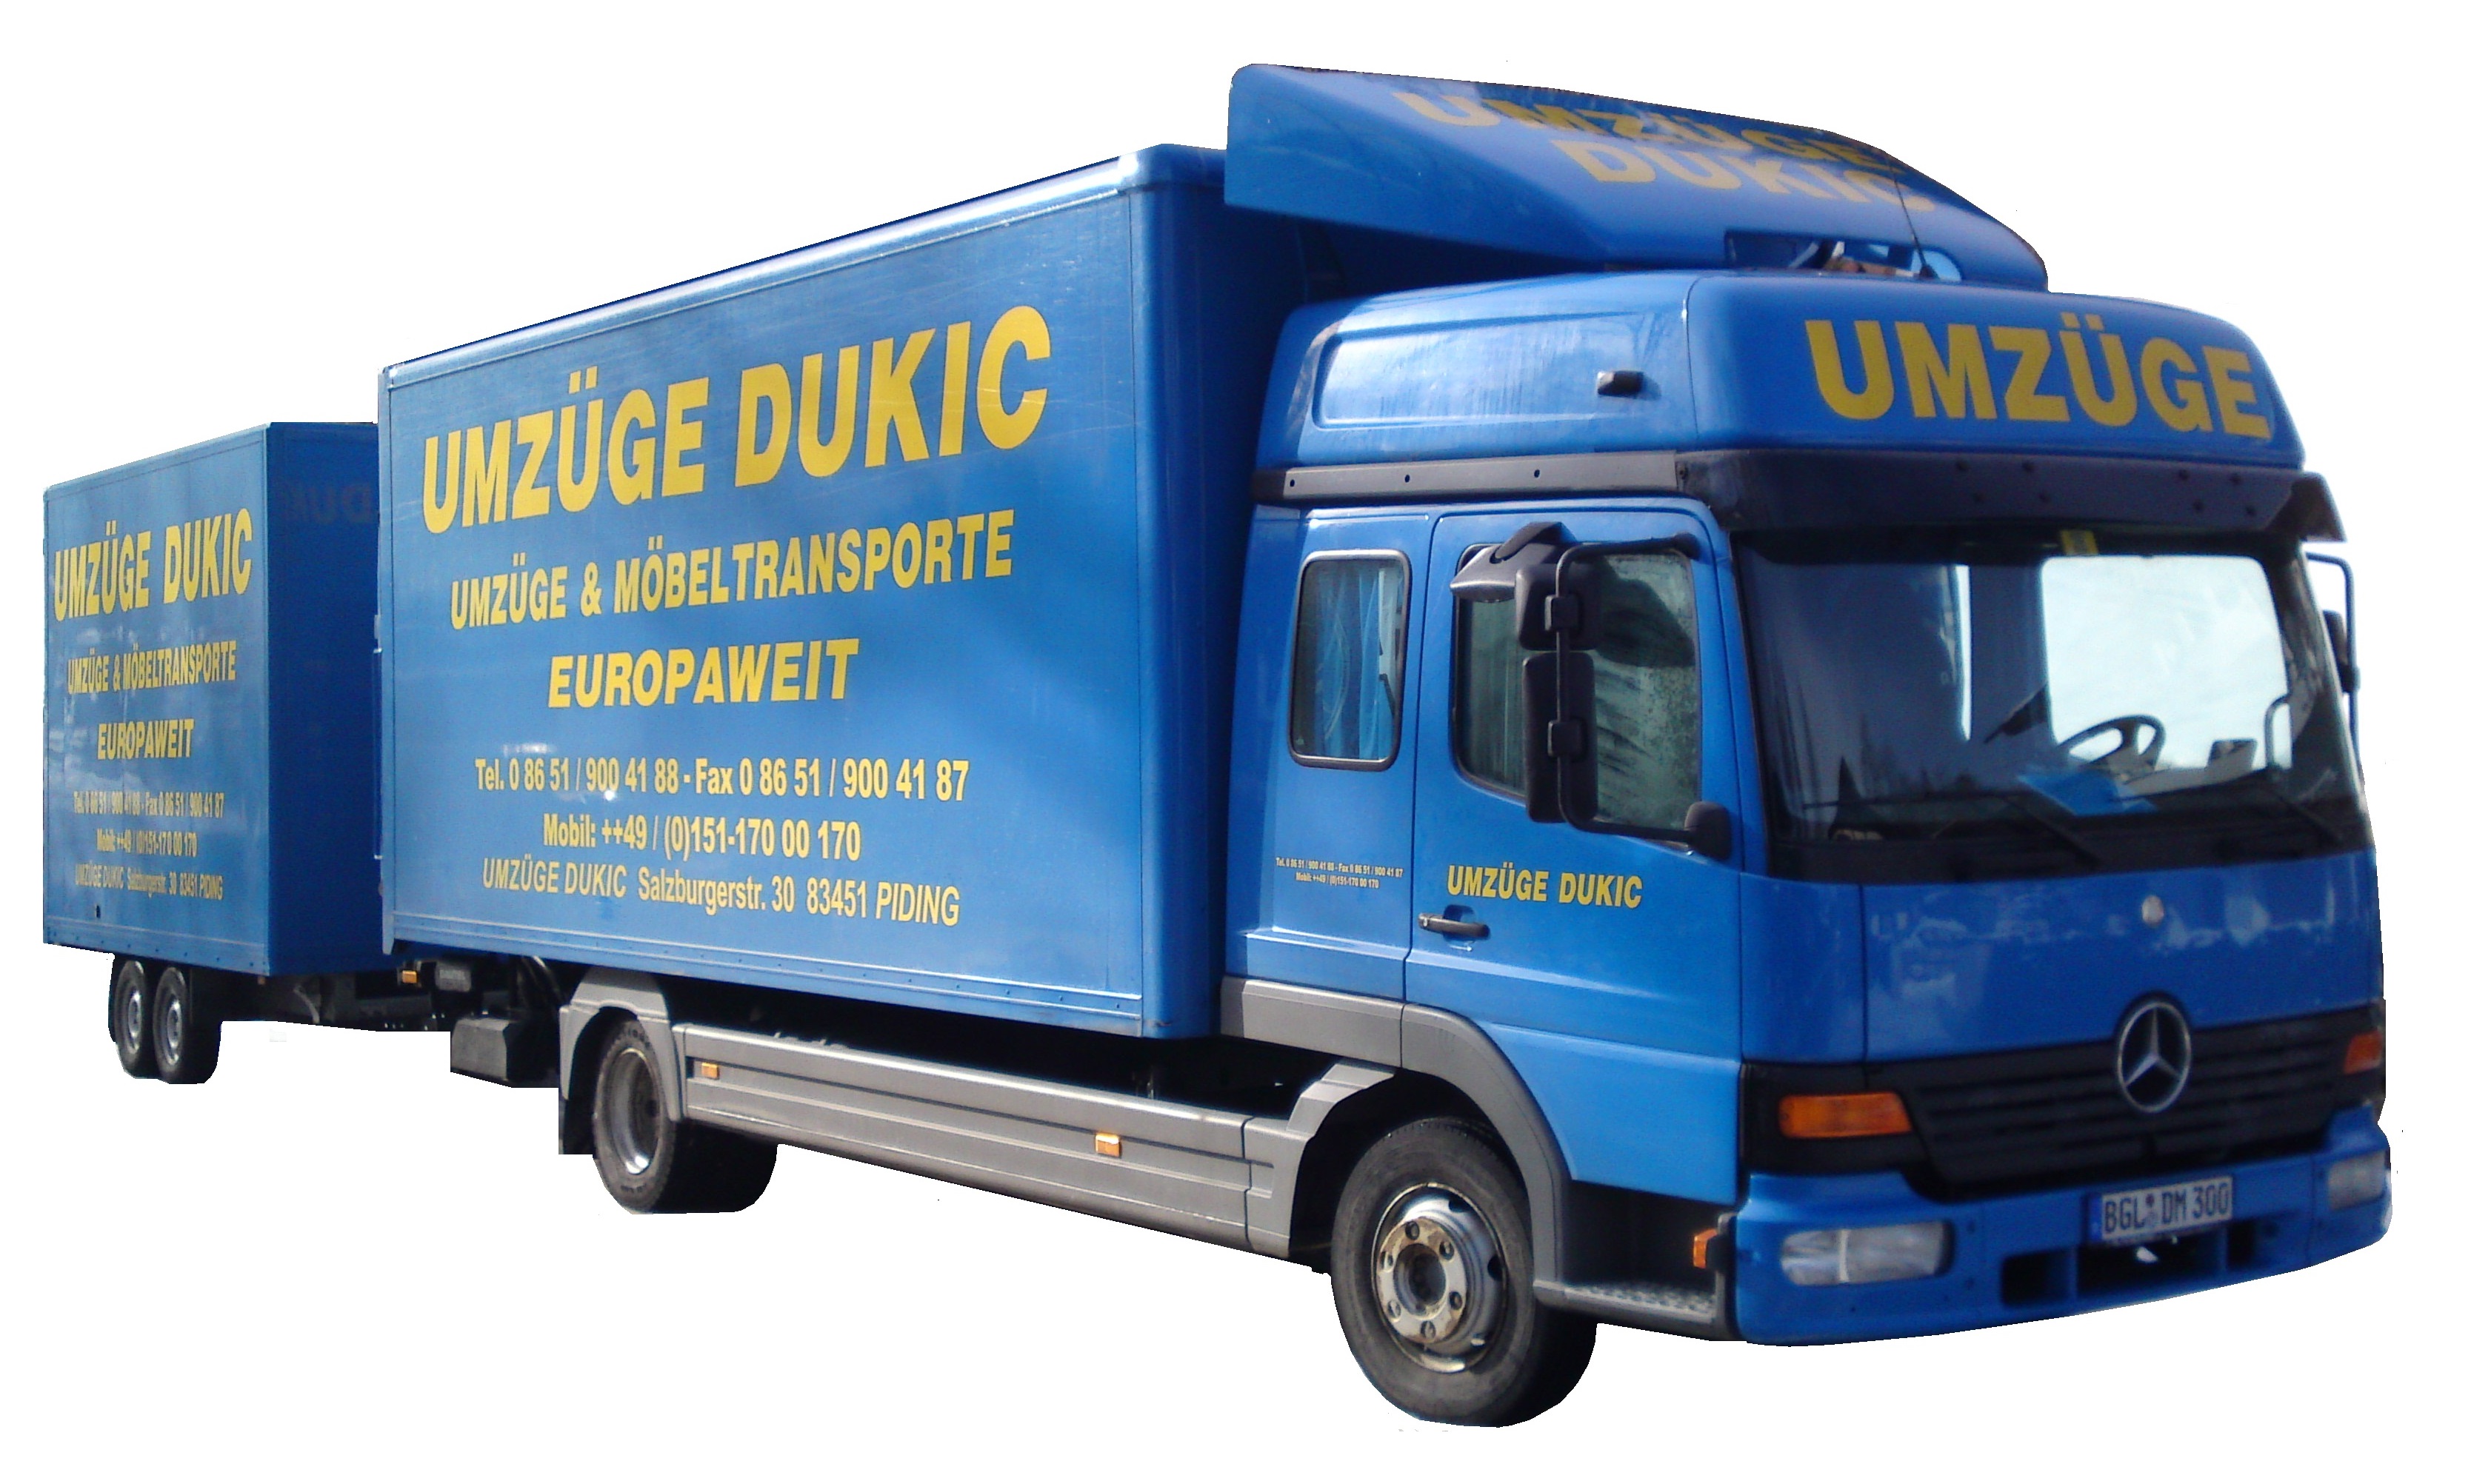 UMZÜGE DUKIC
Umzüge &amp; Klaviertransporte Europaweit
Tel. 08651 / 900 41 88 , Fax.08651 / 900 41 87
www.umzug-dukic.de , info@umzug-dukic.de